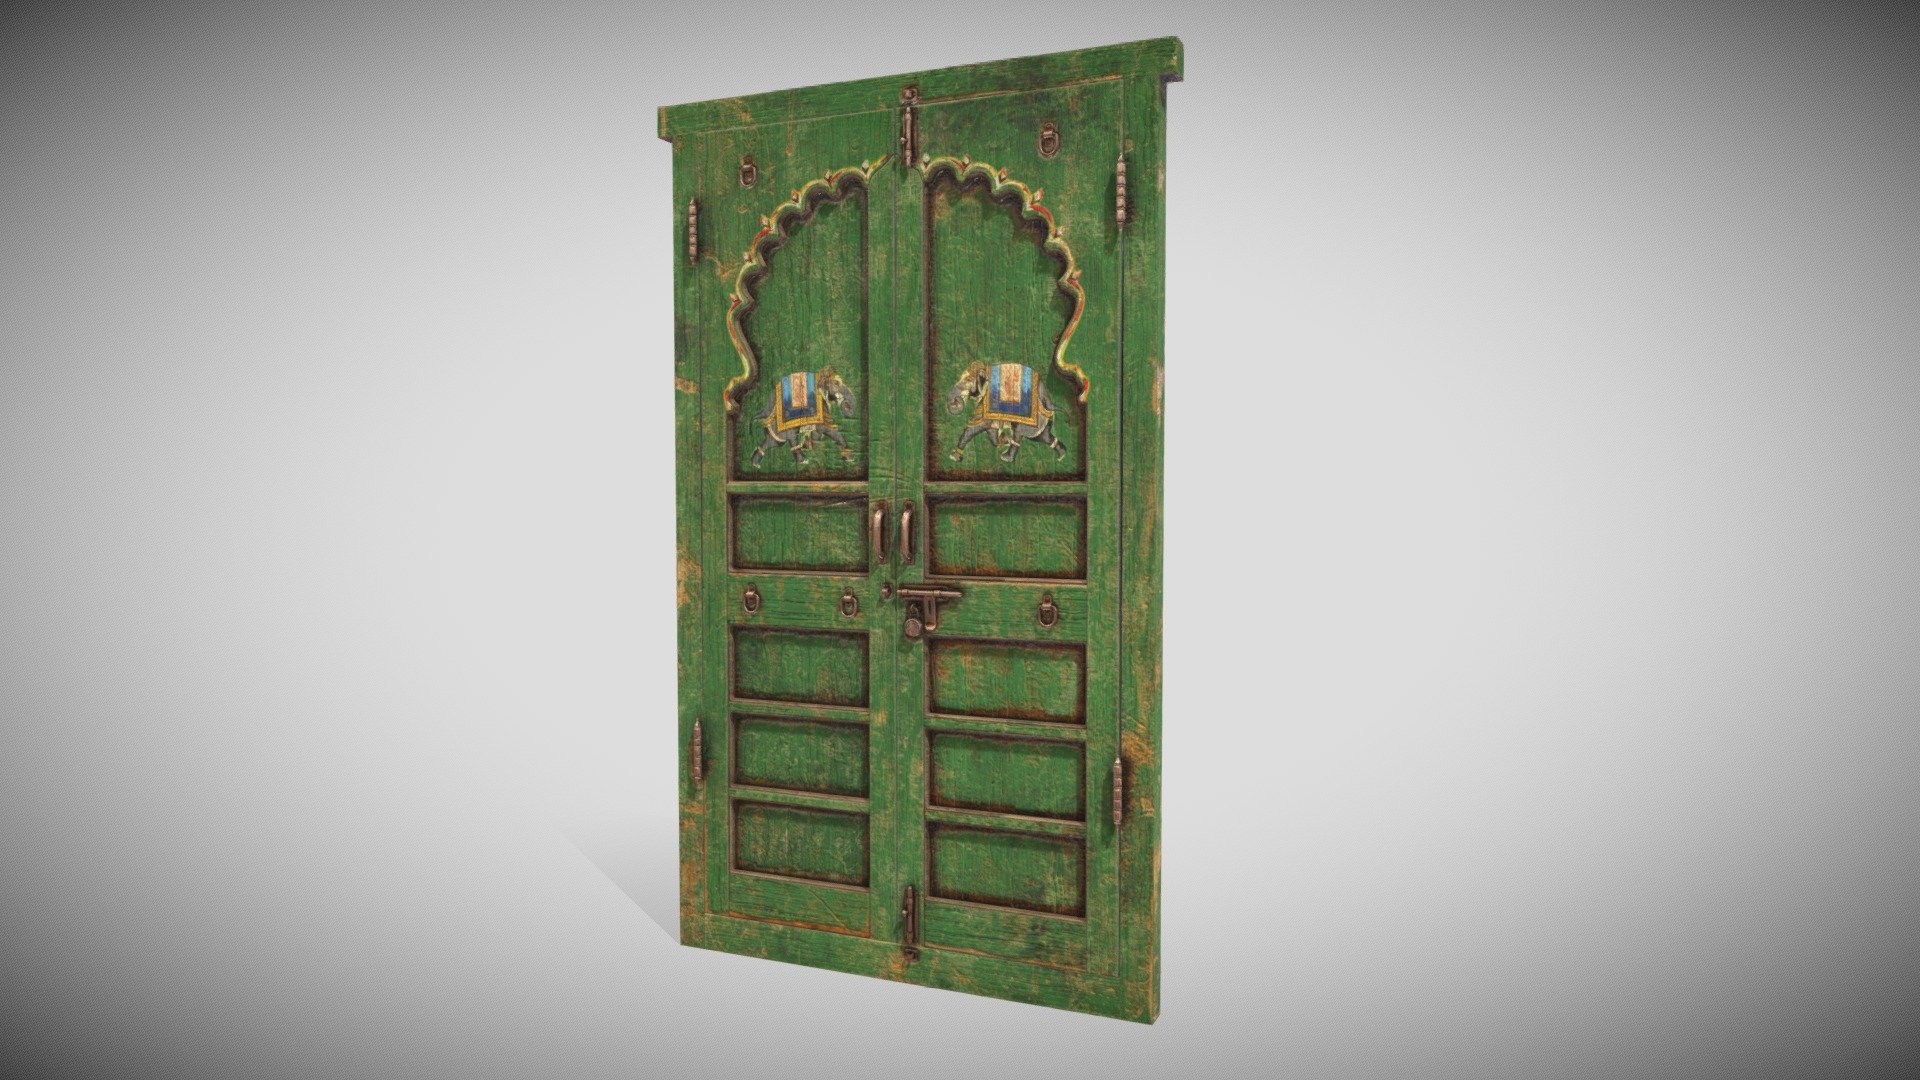 One Material PBR Metalness 4k

Quads - Indian Door - Portaverde - Buy Royalty Free 3D model by Francesco Coldesina (@topfrank2013) 3d model